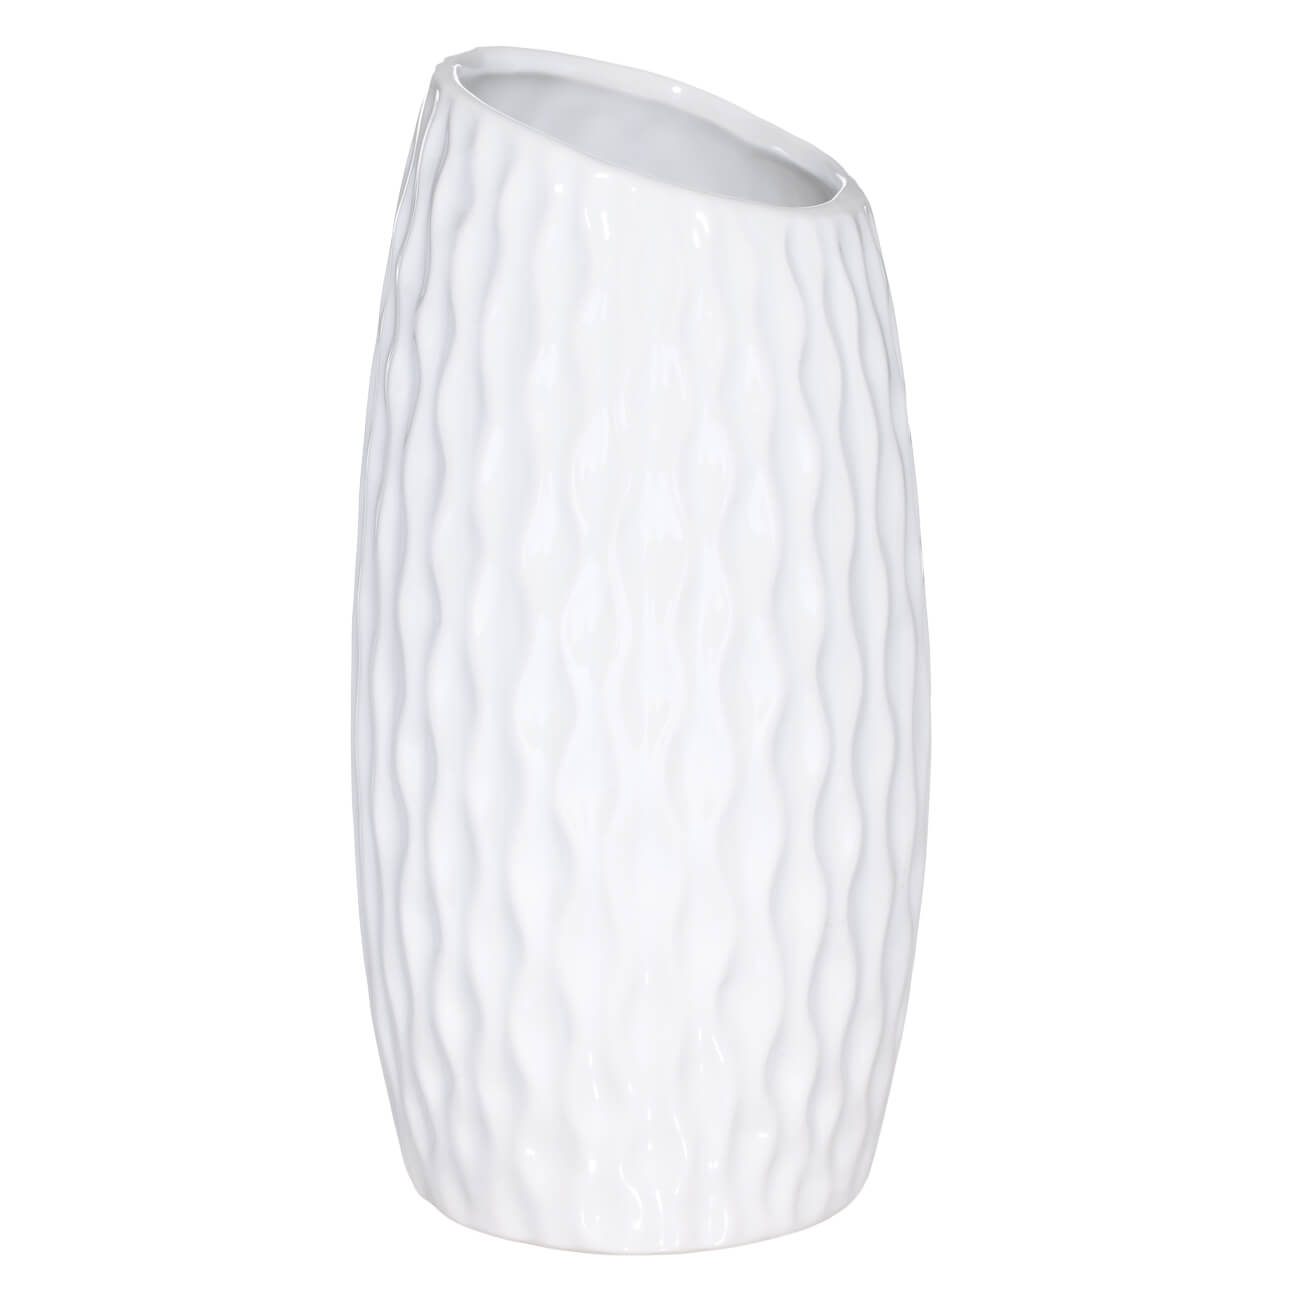 ваза stripe керамика разно ная 20 см Ваза для цветов, 23 см, керамика, белая, Текстура, Aerin